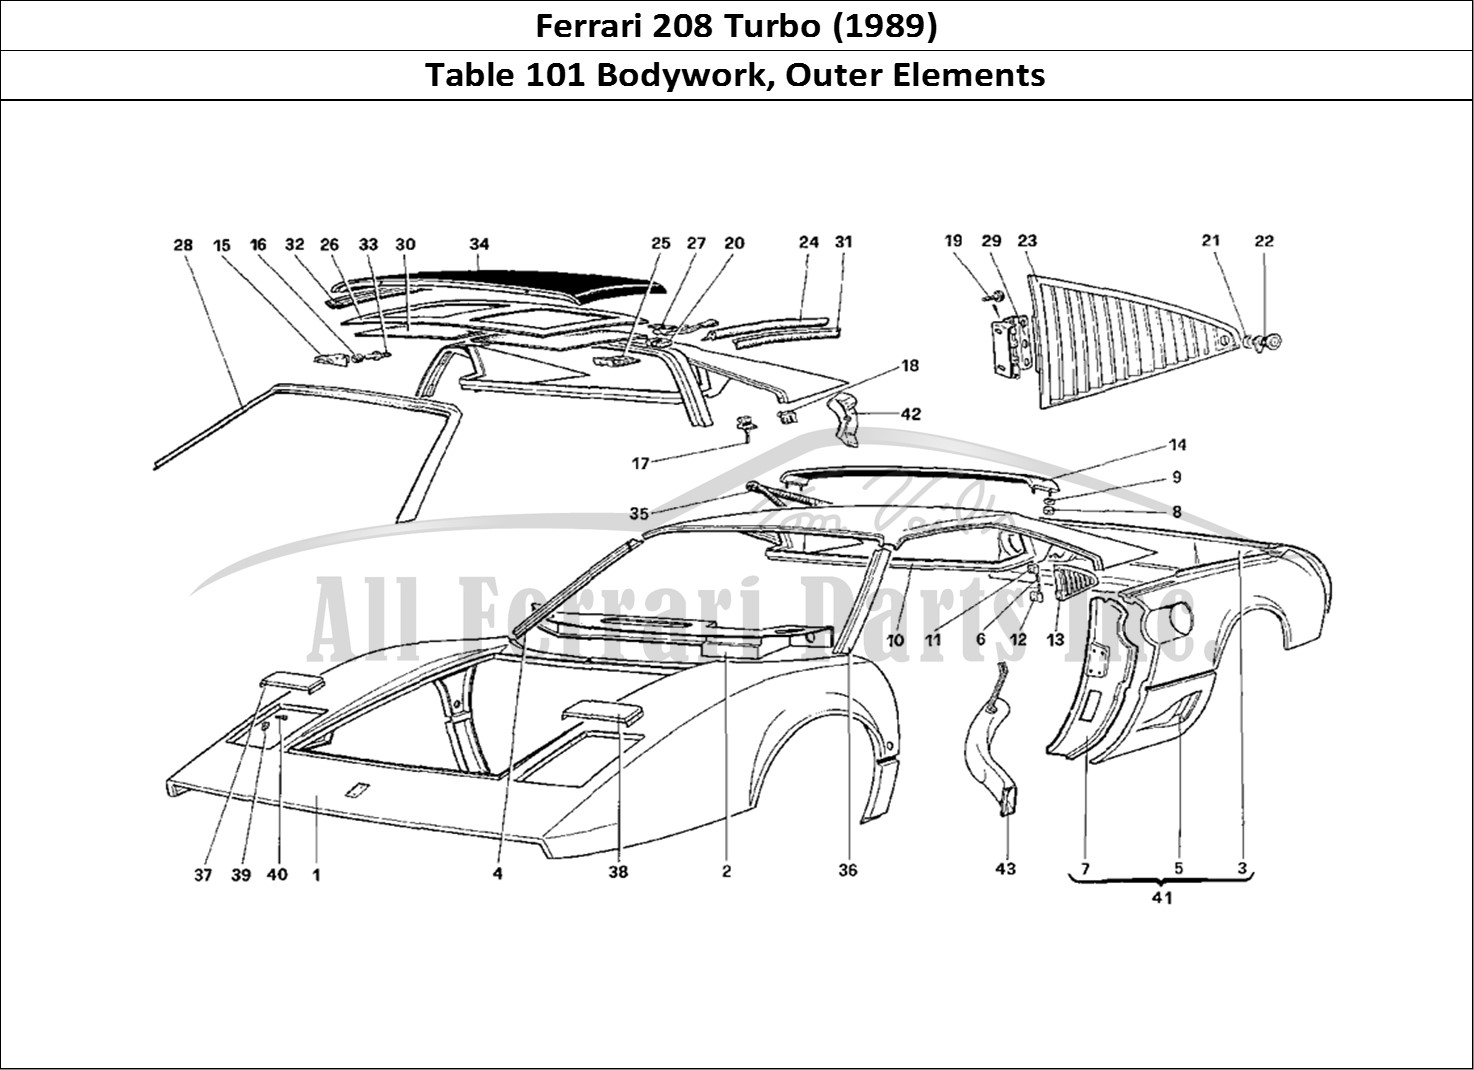 Ferrari Parts Ferrari 208 Turbo (1989) Page 101 Body Shell - Outer Elemen